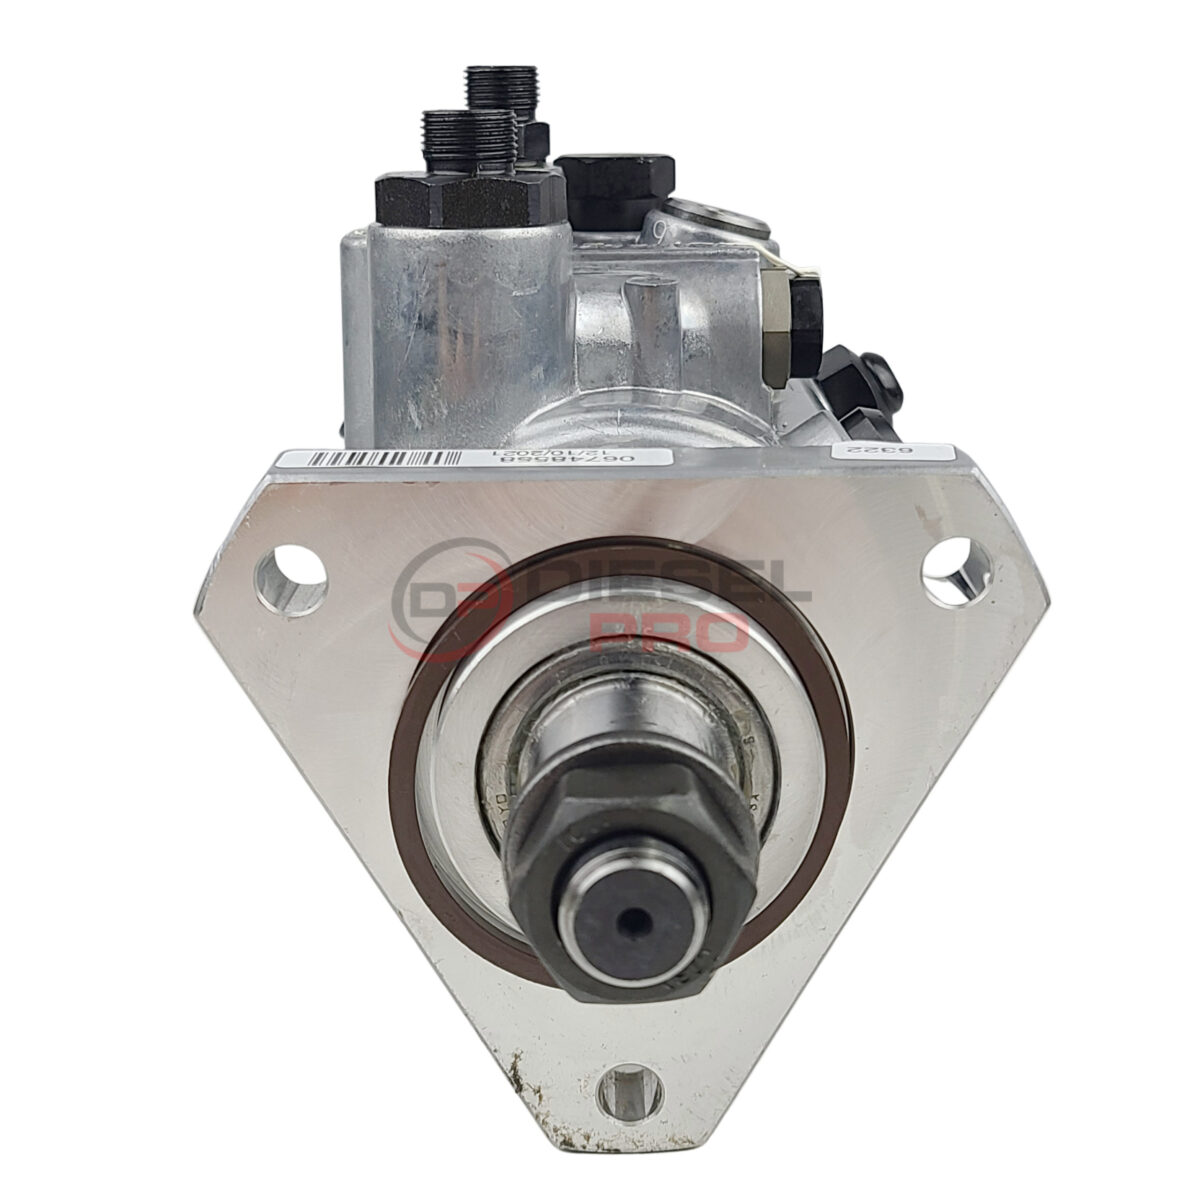 RE518166 | John Deere Fuel Injection Pump also SE501235